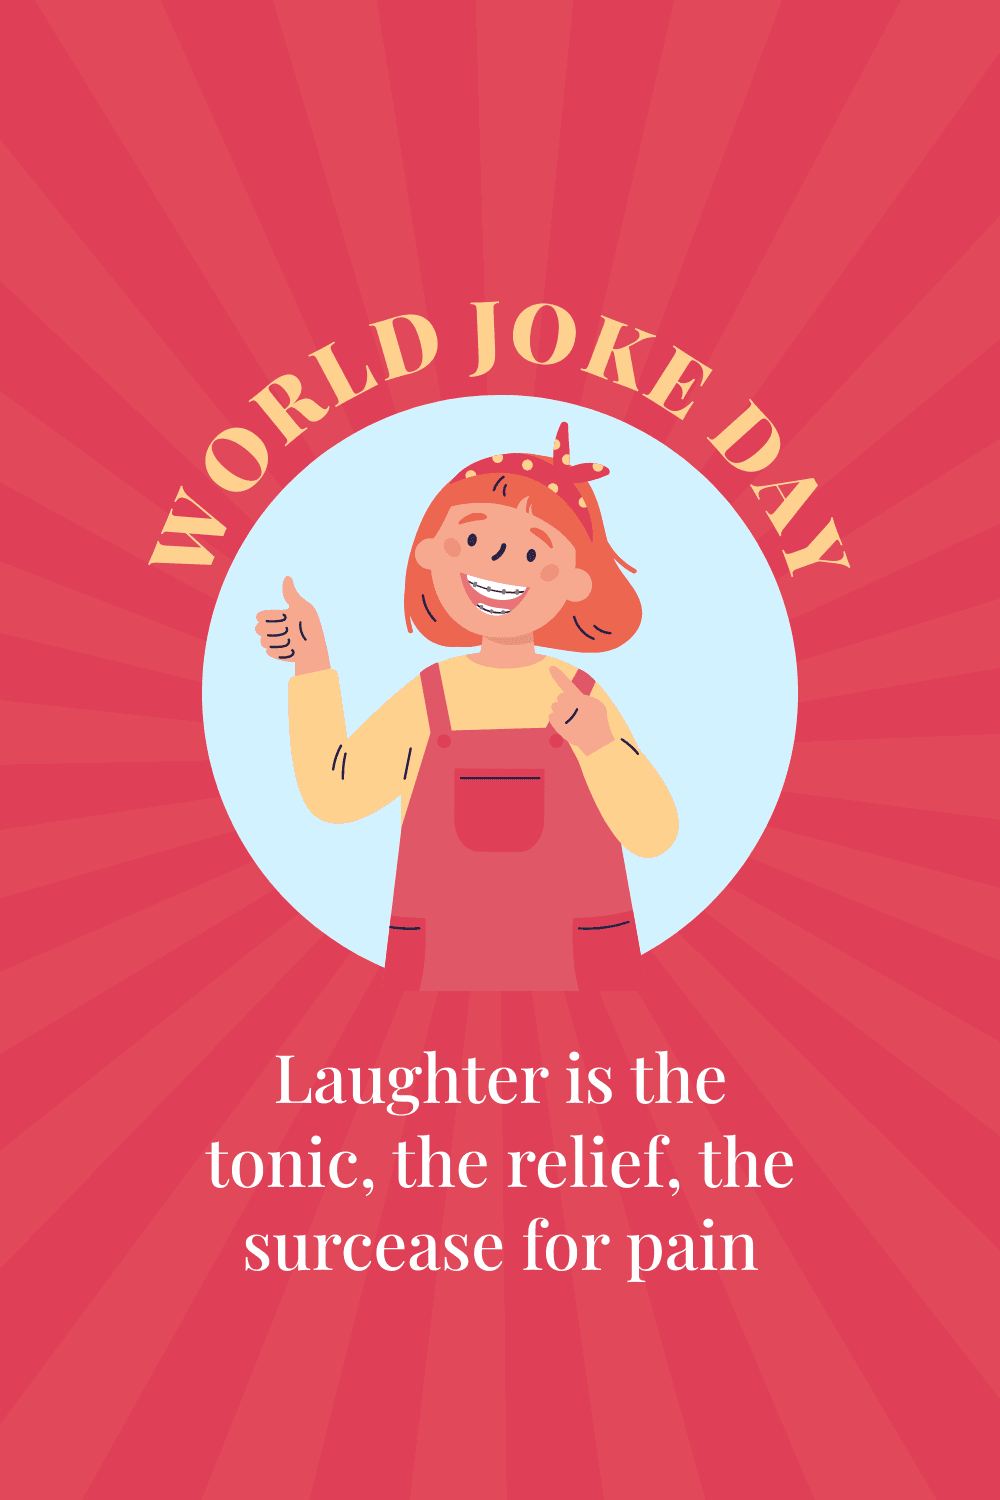 woman-laughing-illustrated-world-joke-day-pinterest-pin-template-thumbnail-img